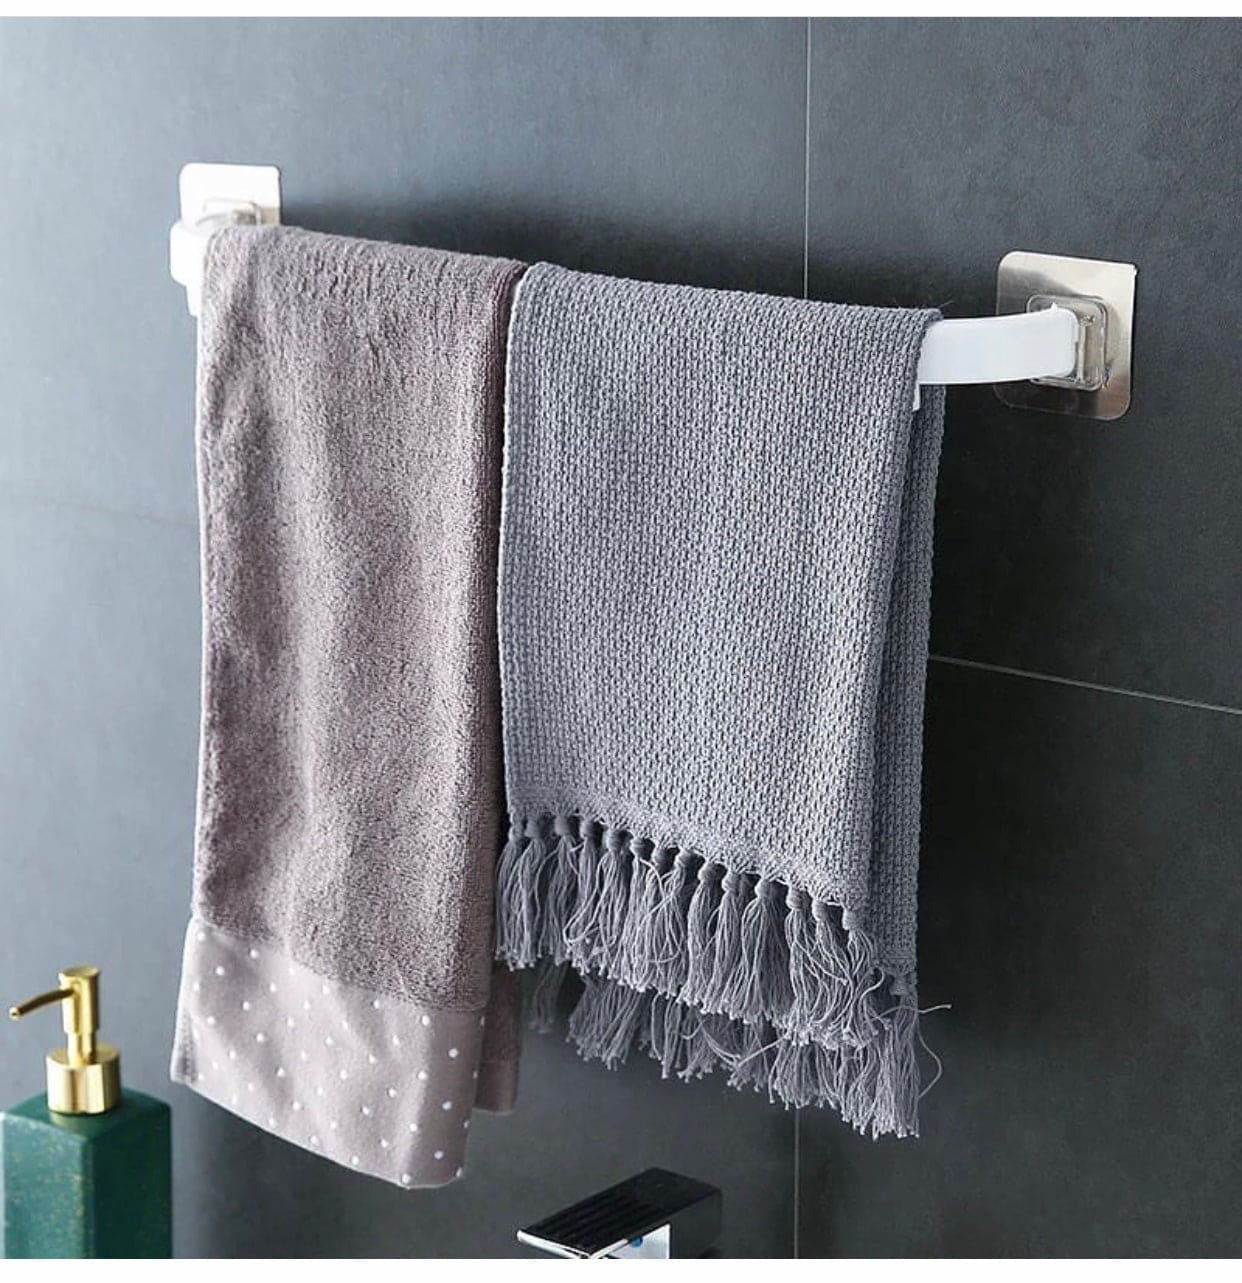 Towel Holder For Bathroom, Self Adhesive Punch-Free Plastic Bathroom Towel Bar, Modern Towel Rail Bathroom for Home Kitchen Bathroom, Towel Stand